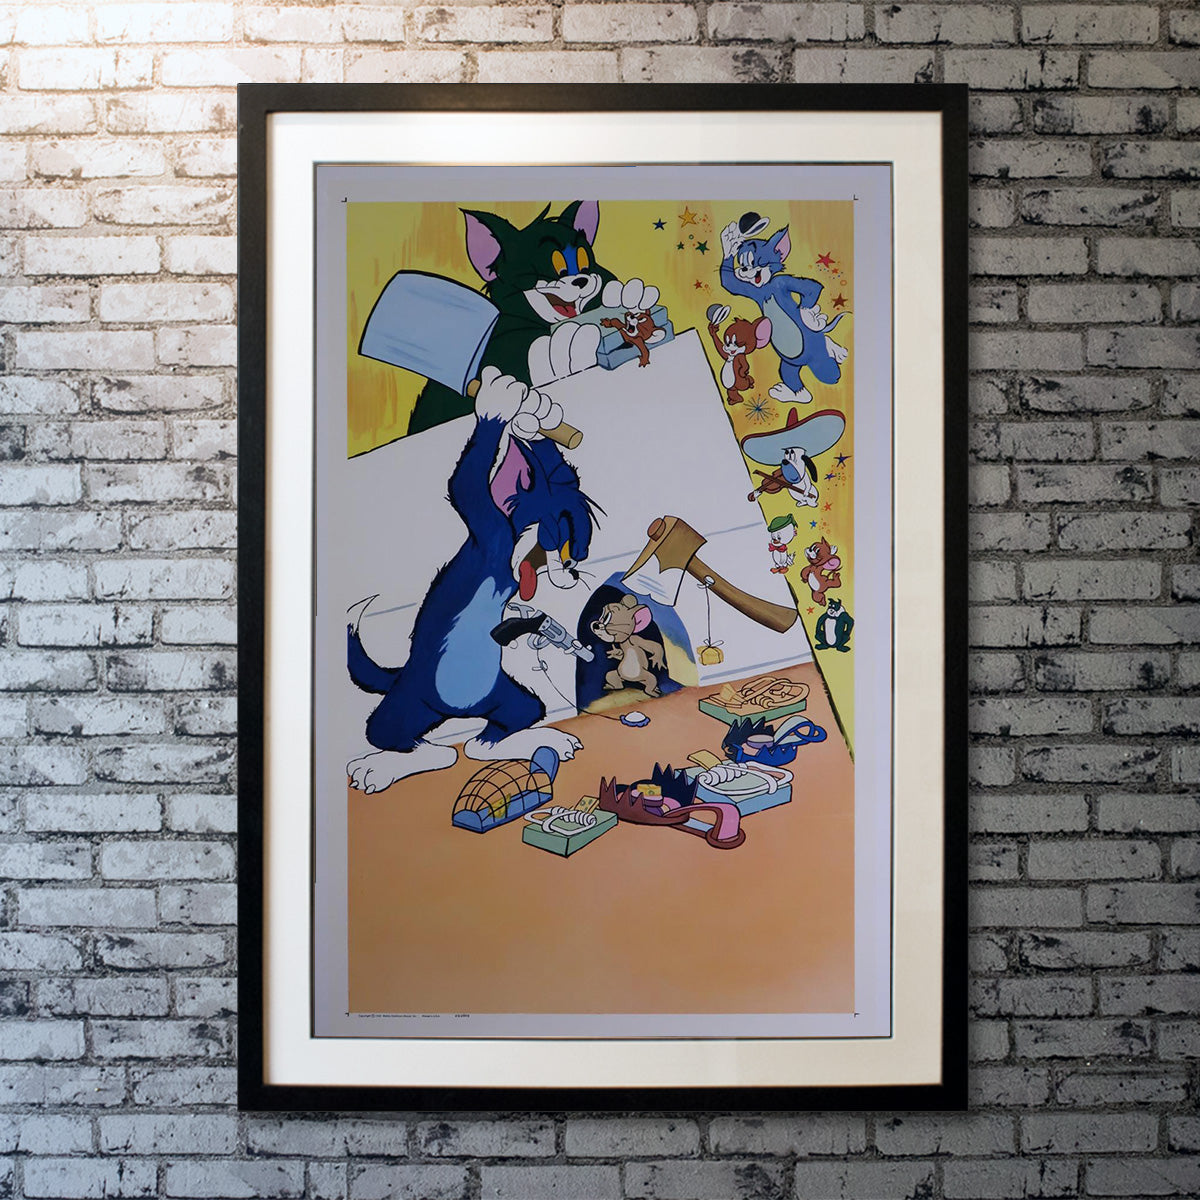 Original Movie Poster of Tom And Jerry (1963R)